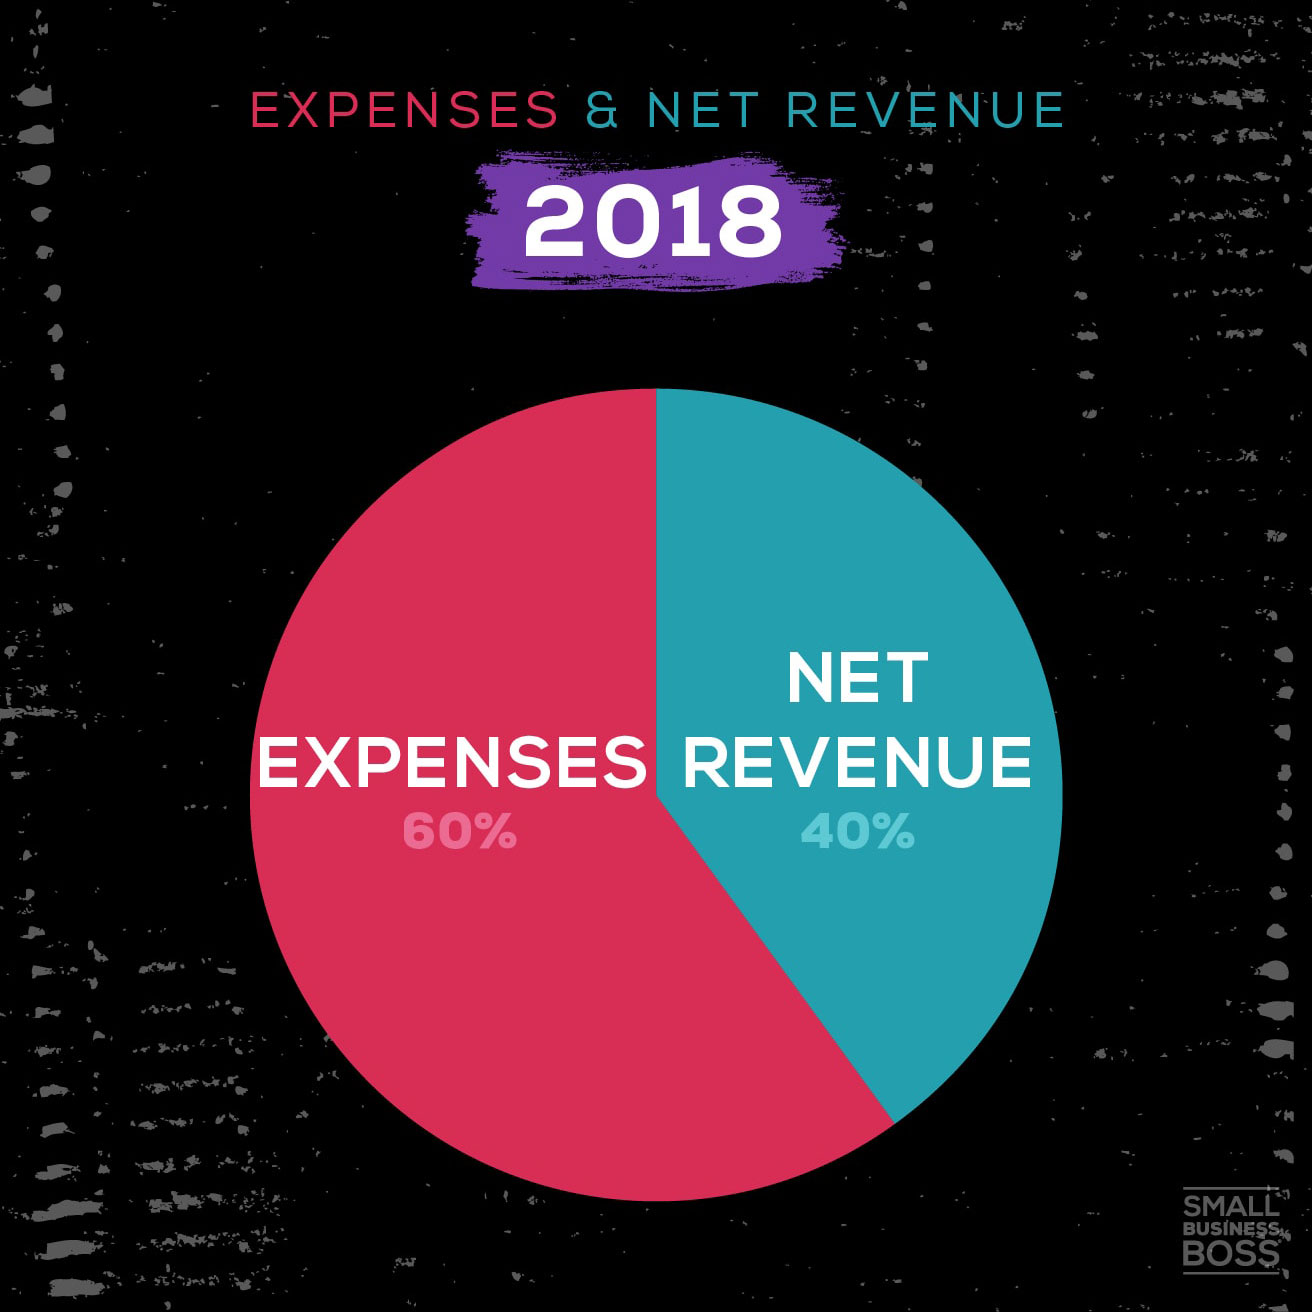 pie chart depicting expenses vs revenue in 2018